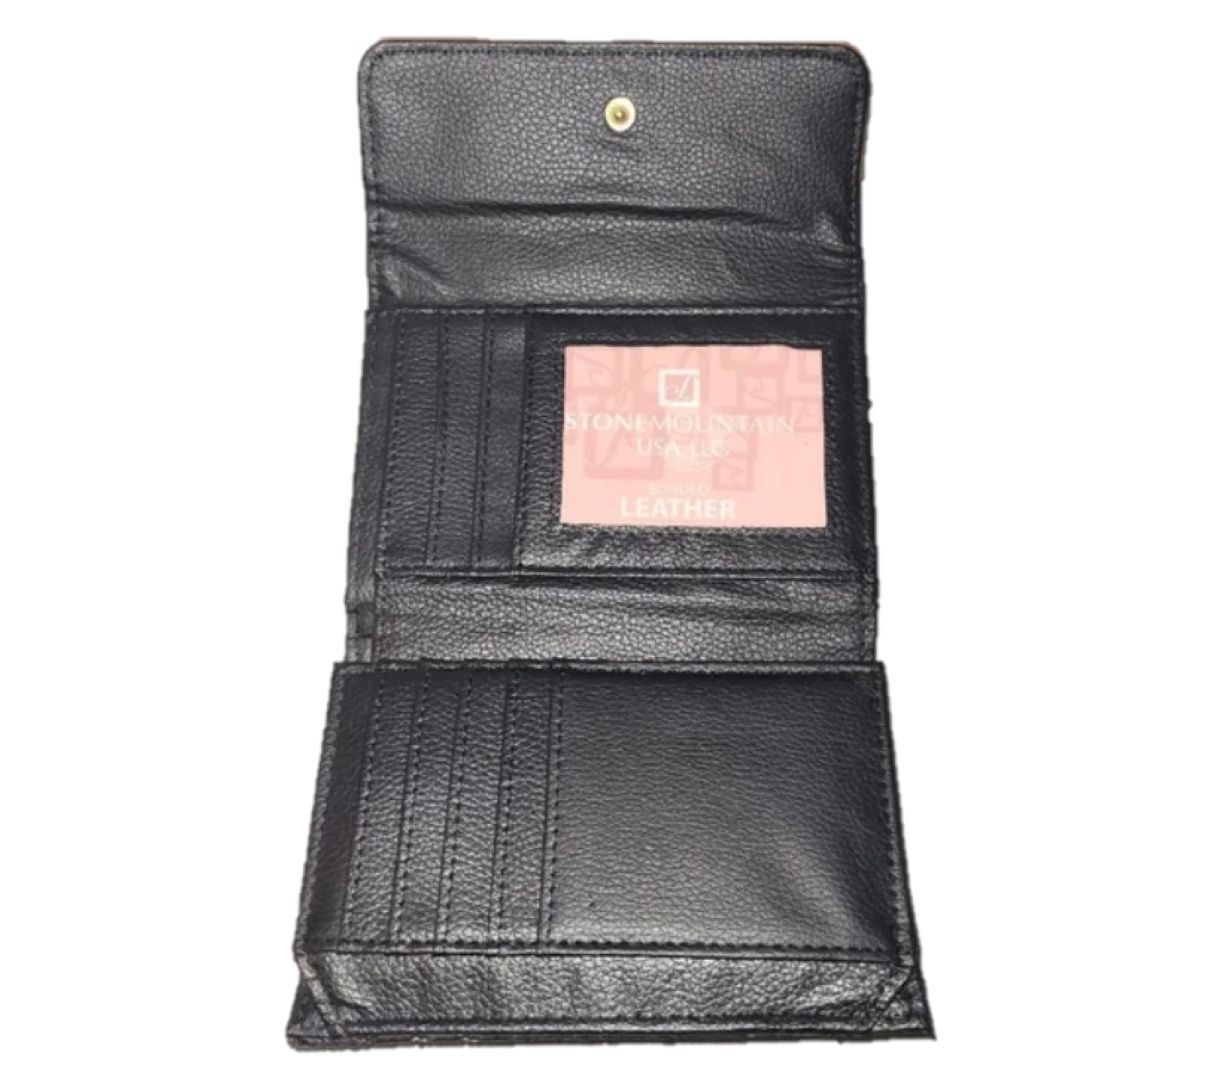 Stone Mountain Leather Paisley Small Trifold Wallet-Black 